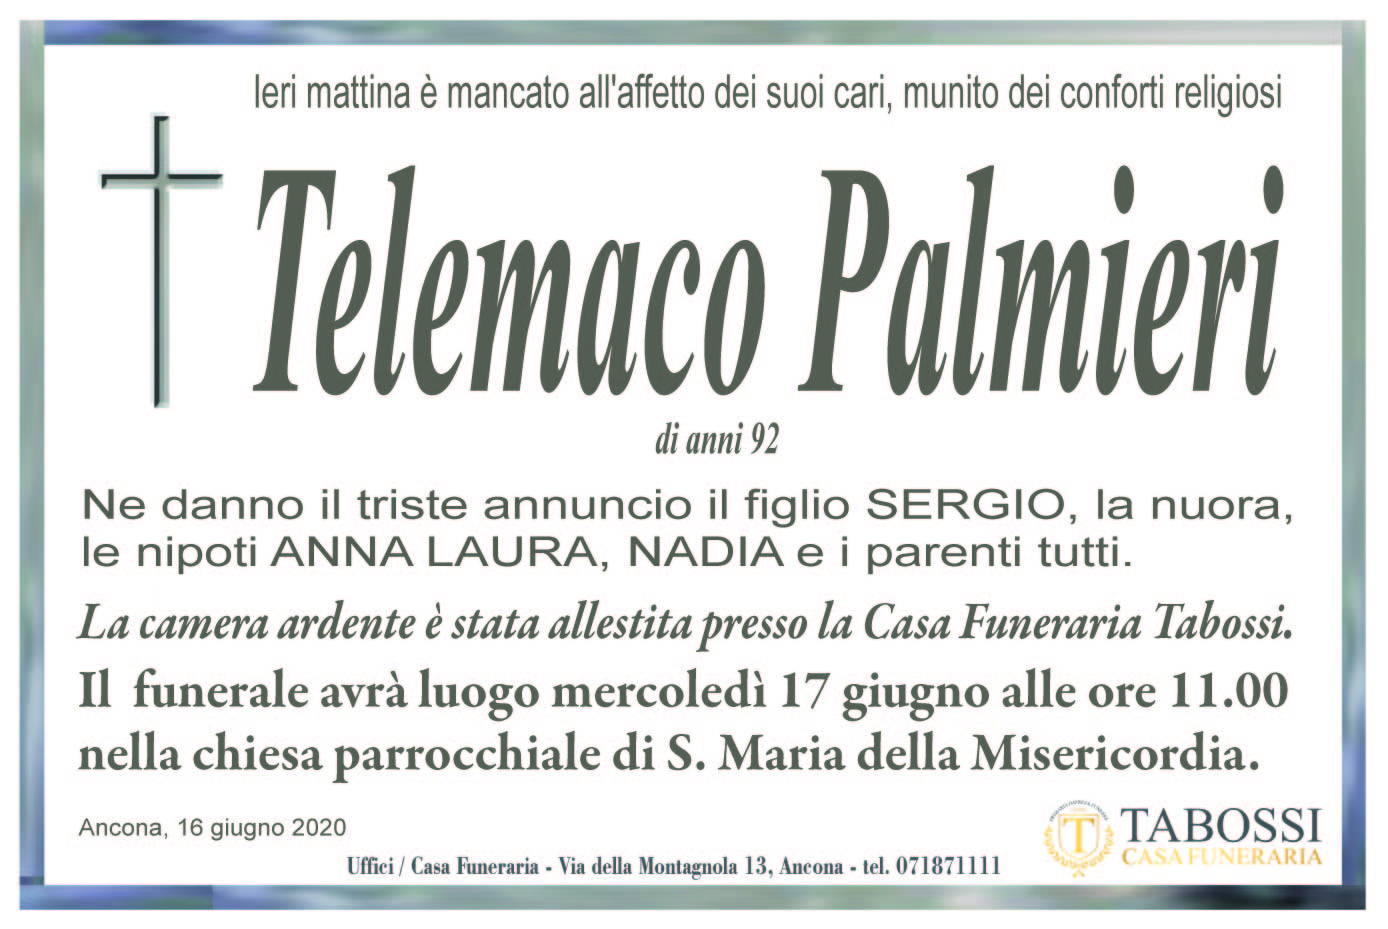 Telemaco Palmieri